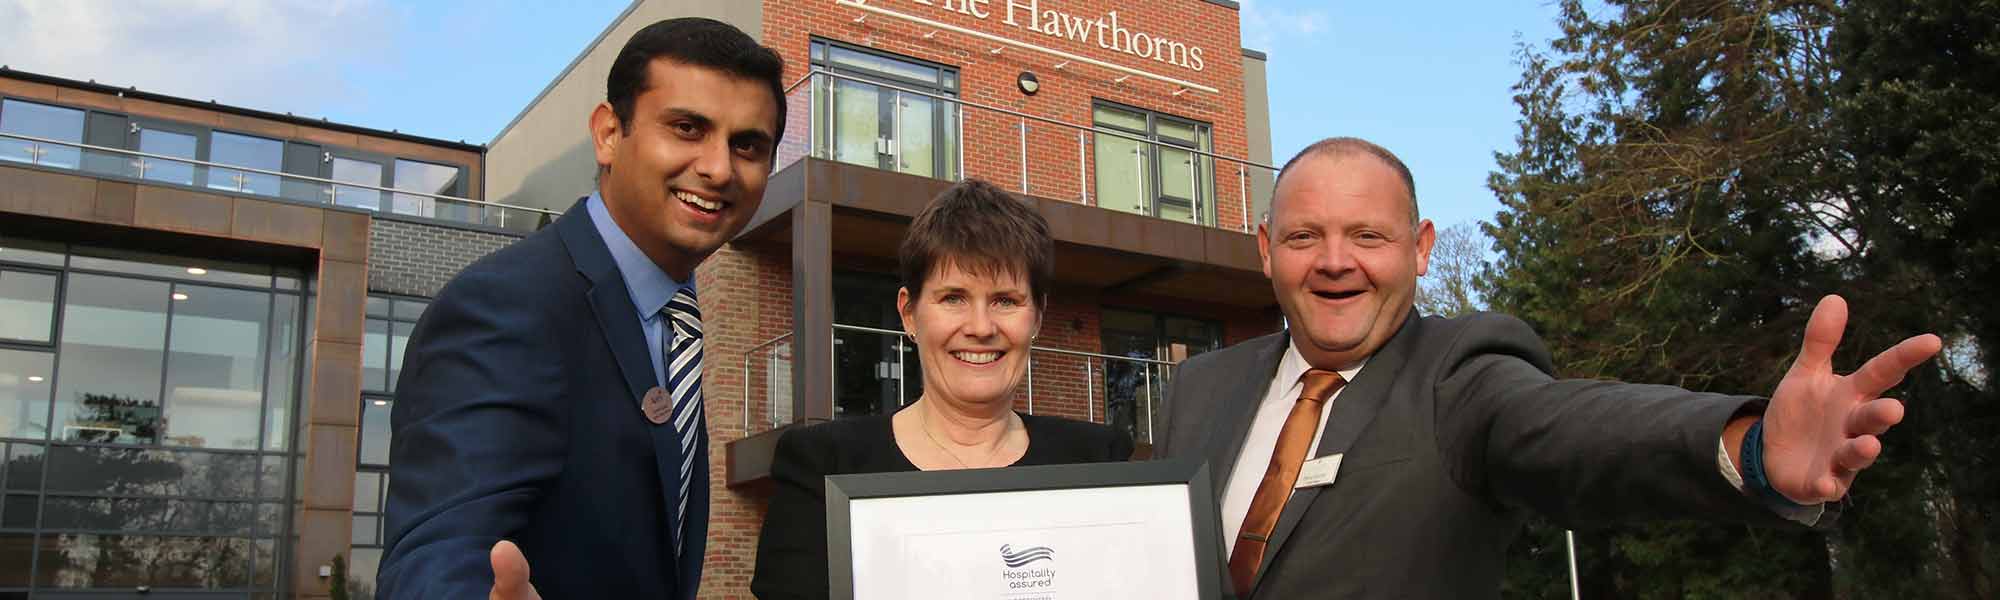 The Hawthorns Northampton Hospitality Assured Award Northamptonshire banner hero